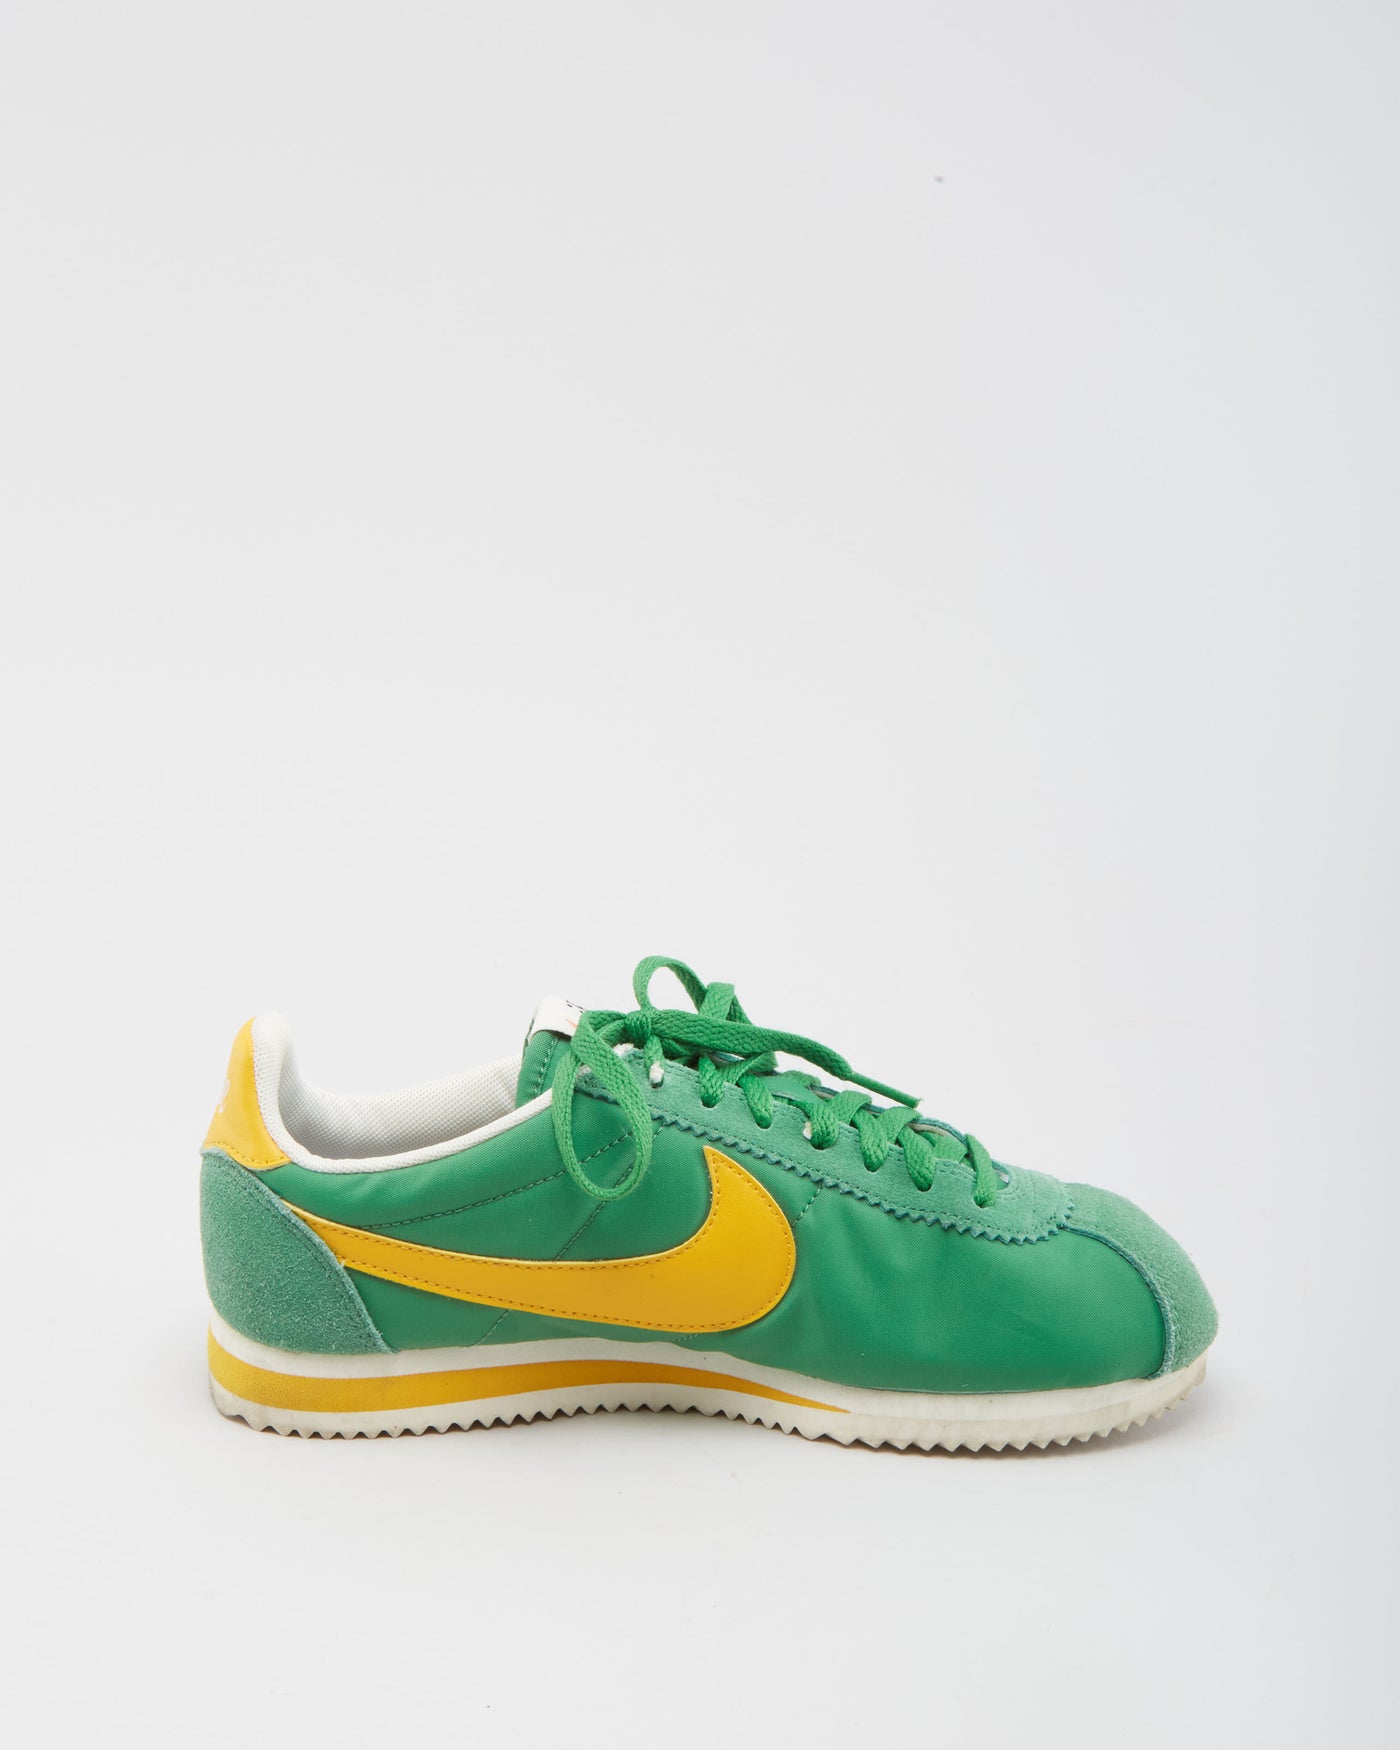 Nike Cortez XLV Green / Yellow Trainers - UK6